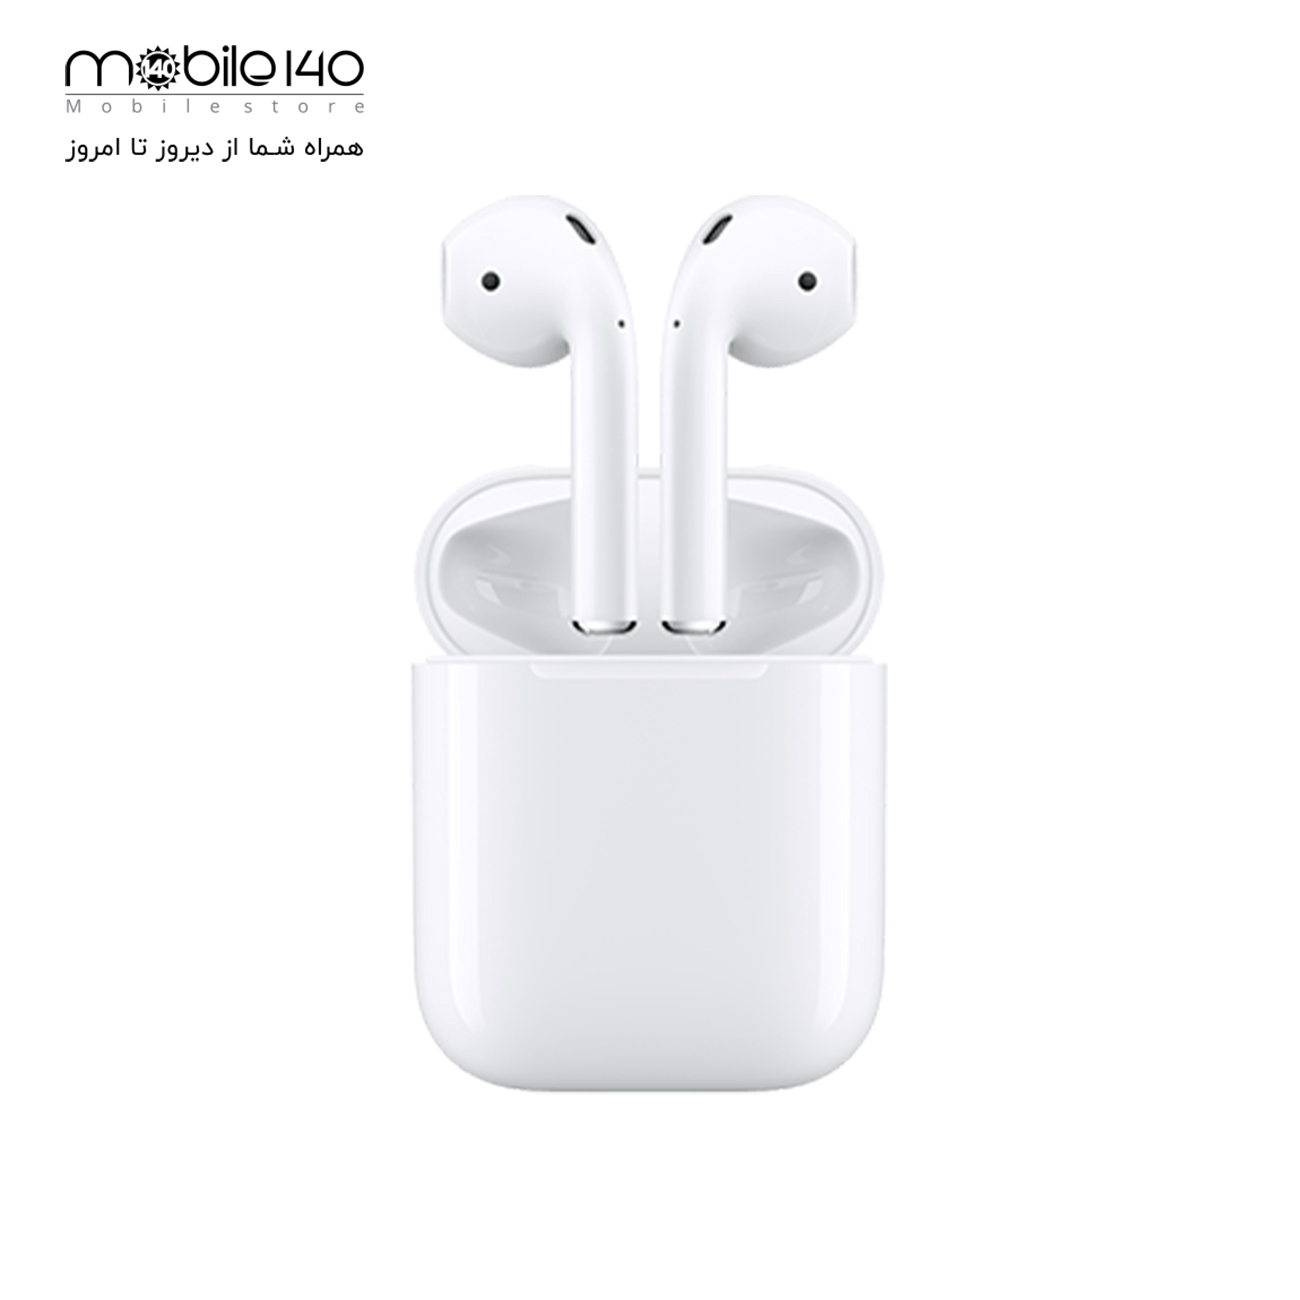 Apple AirPods Wireless Headphones 2